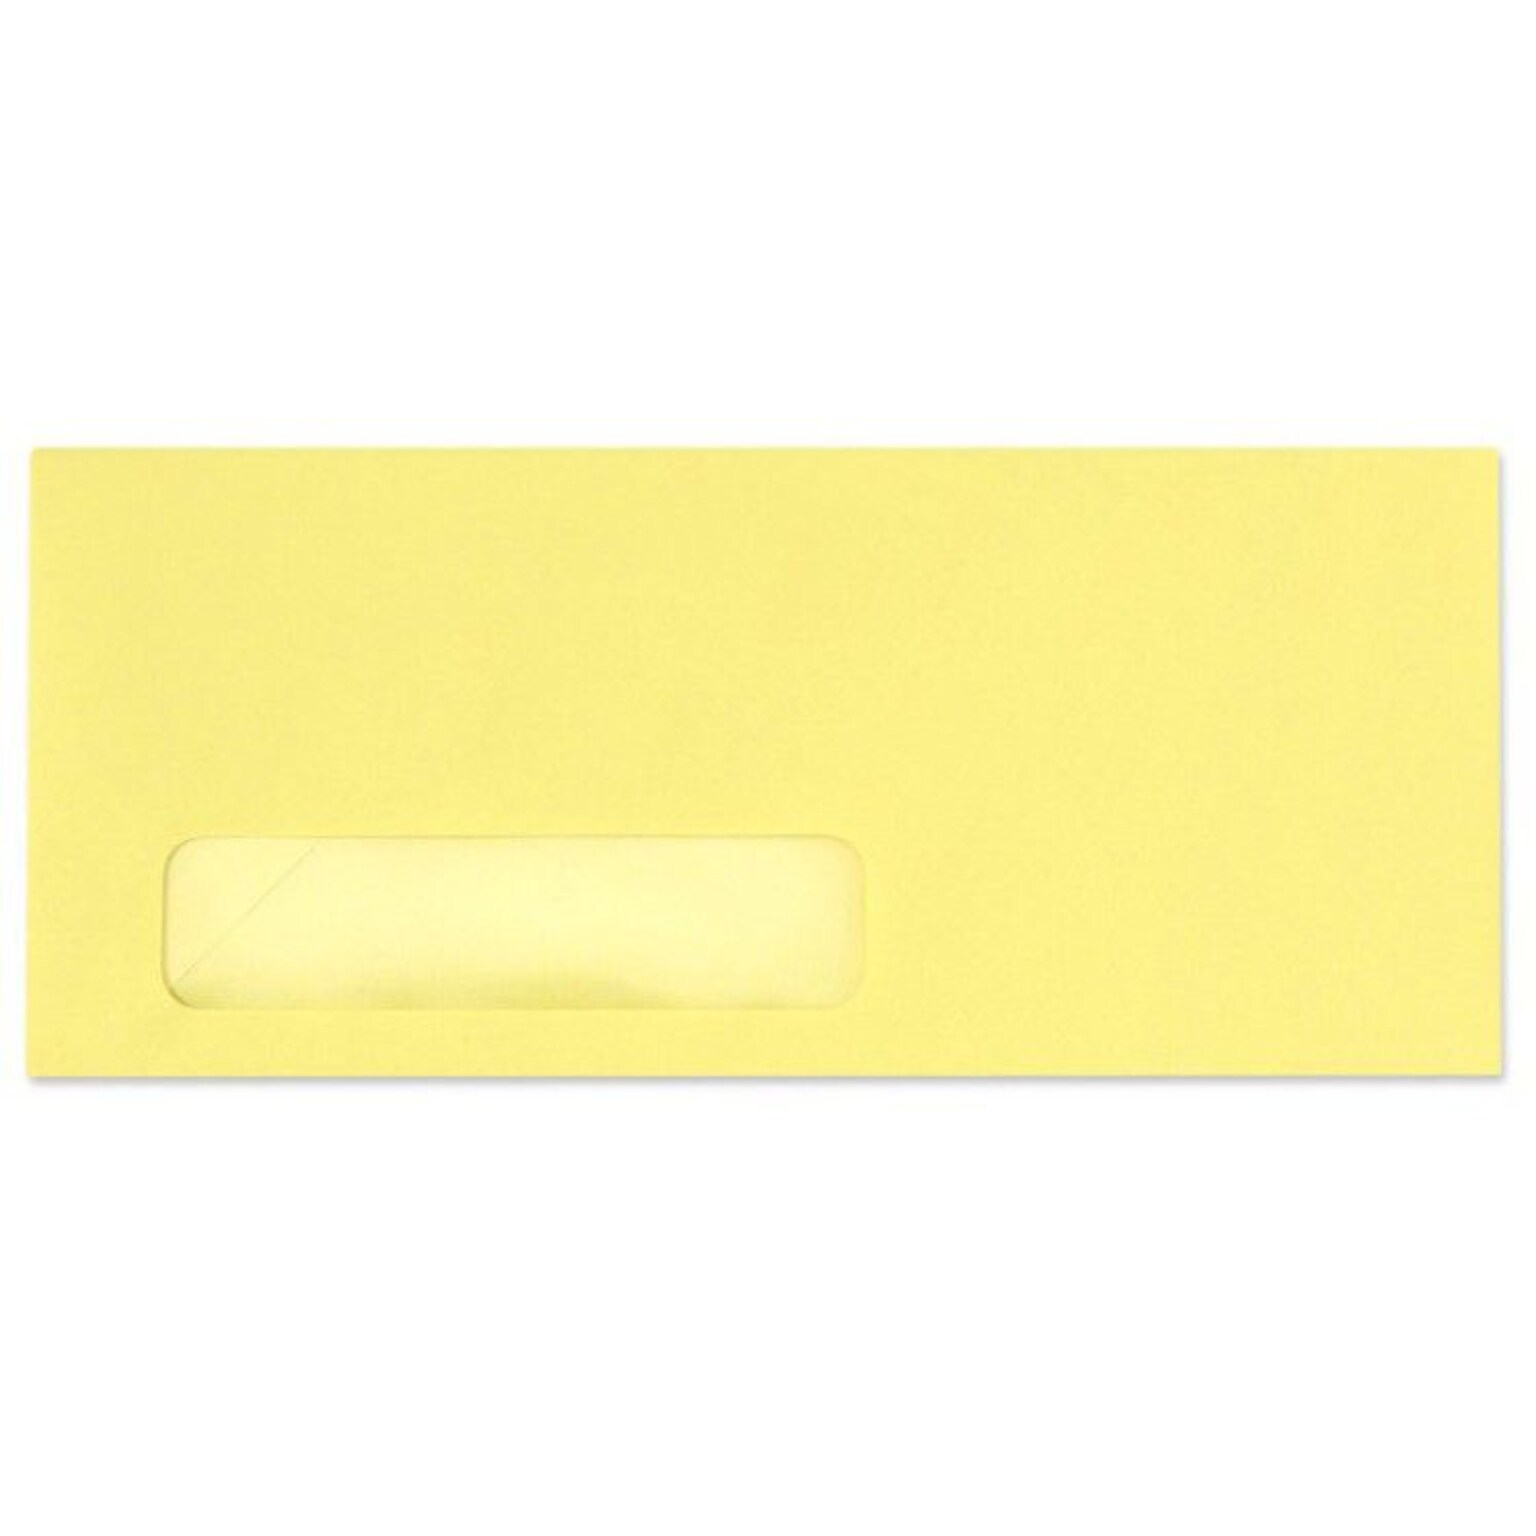 LUX Pastels Moistenable Glue #10 Window Envelope, 4 1/2 x 9 1/2, Pastel Cary Yellow, 250/Box (11824-250)